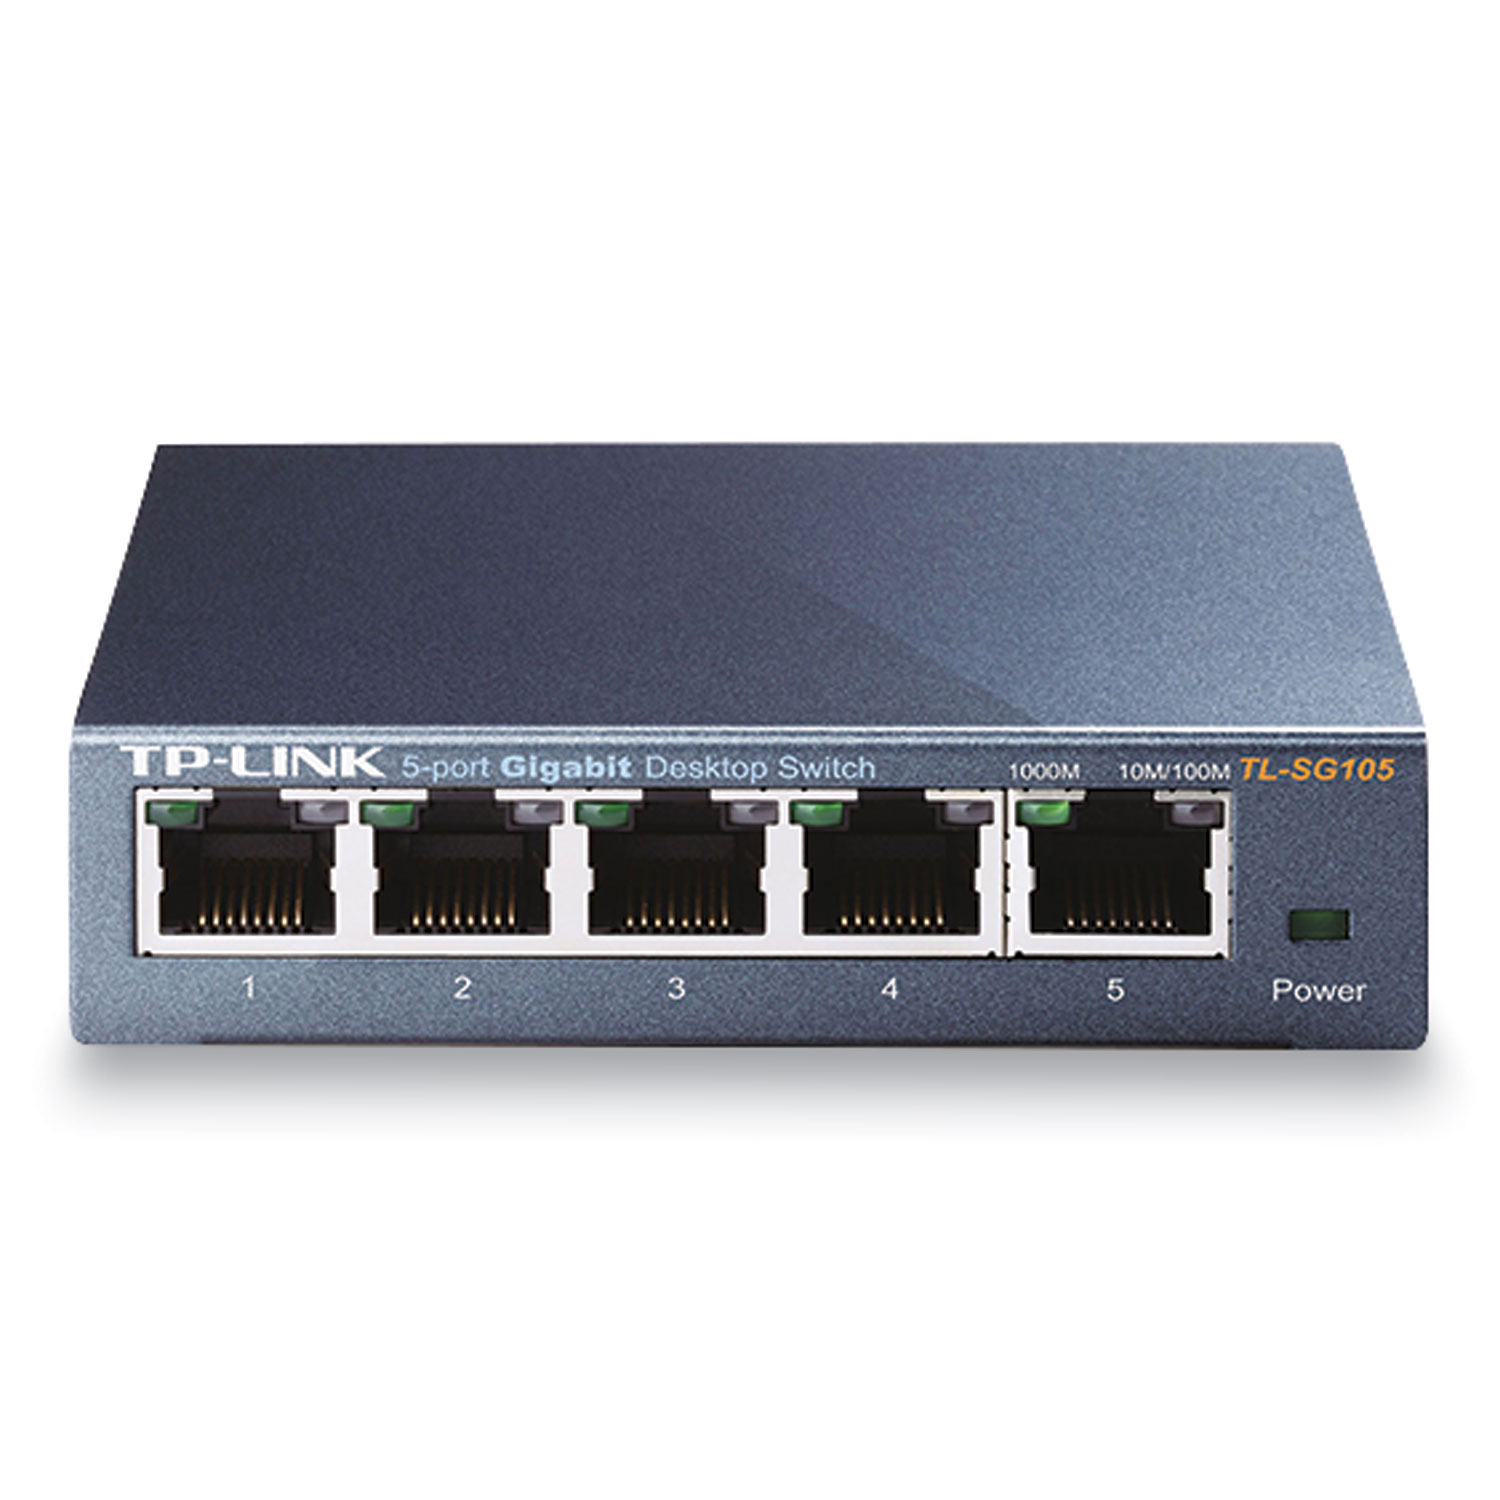 TP-Link Desktop Gigabit Ethernet Switch, 10 Gbps Bandwidth, 1 MB Buffer, 5 Ports